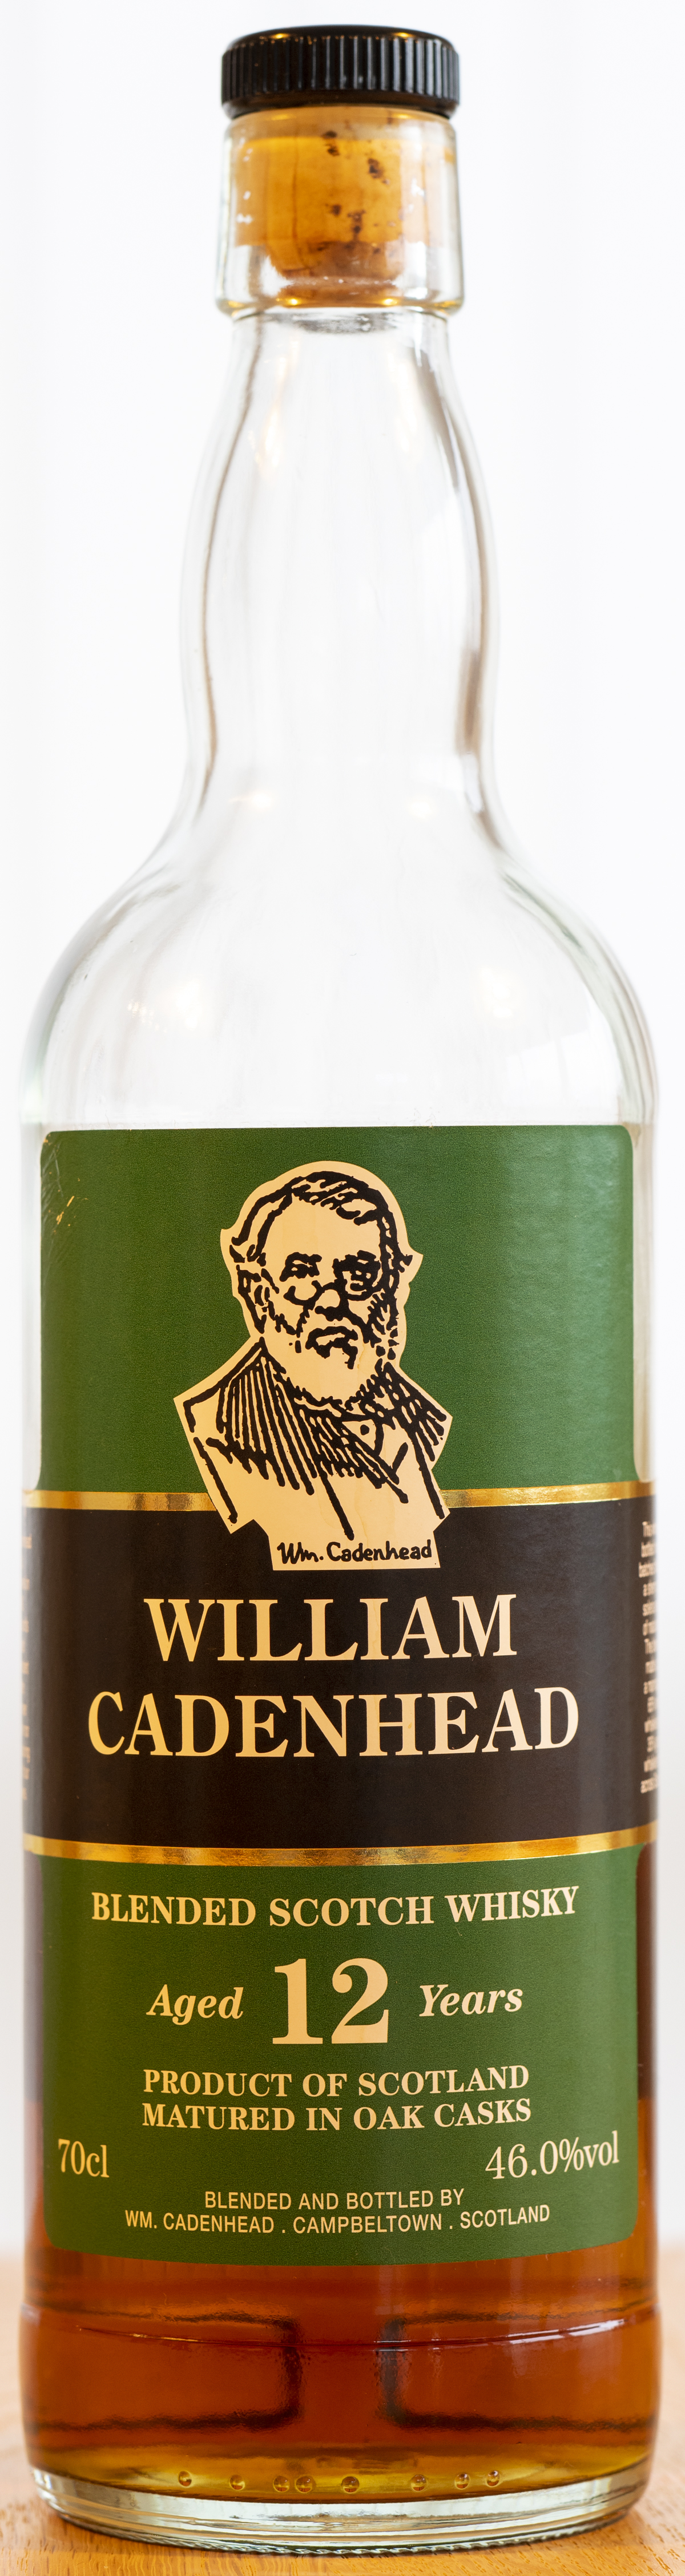 Billede: PHC_3871 - William Cadenhead Blended Scotch Whsiky 12y - bottle front.jpg